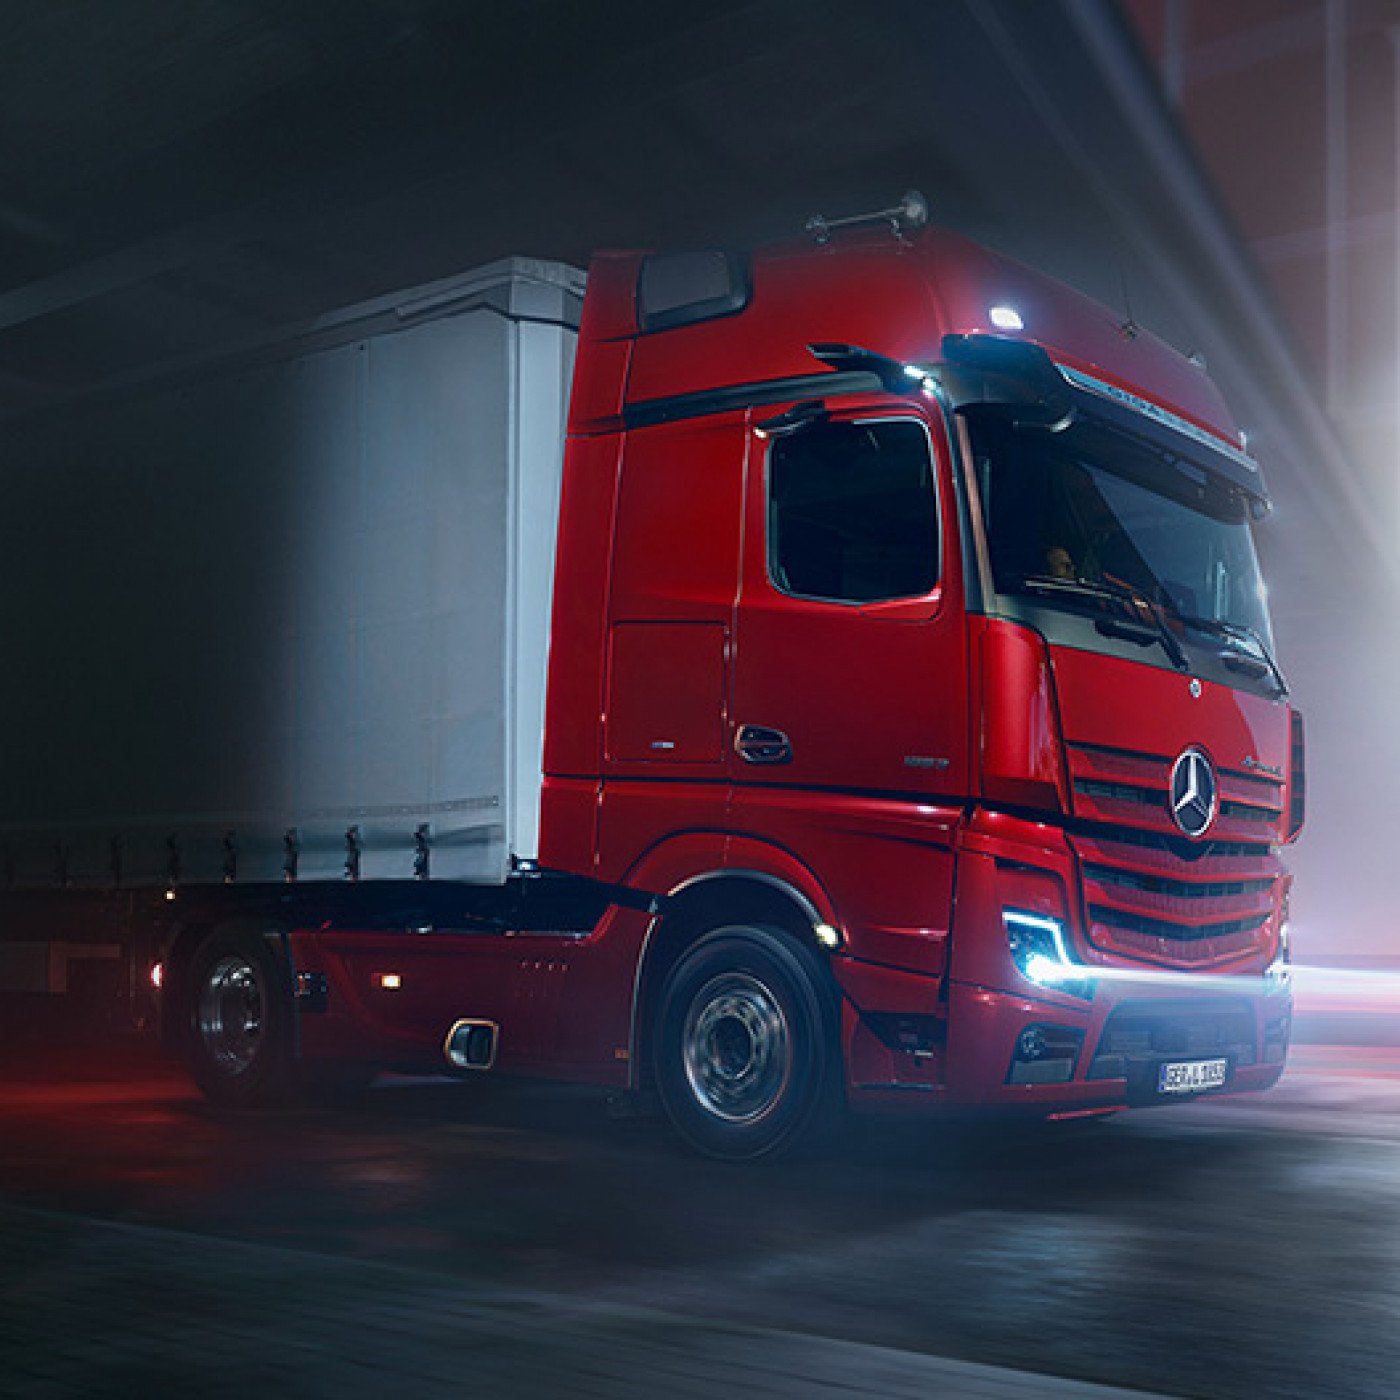 actros l new standards in the premium segment of long haul trucks 940 02